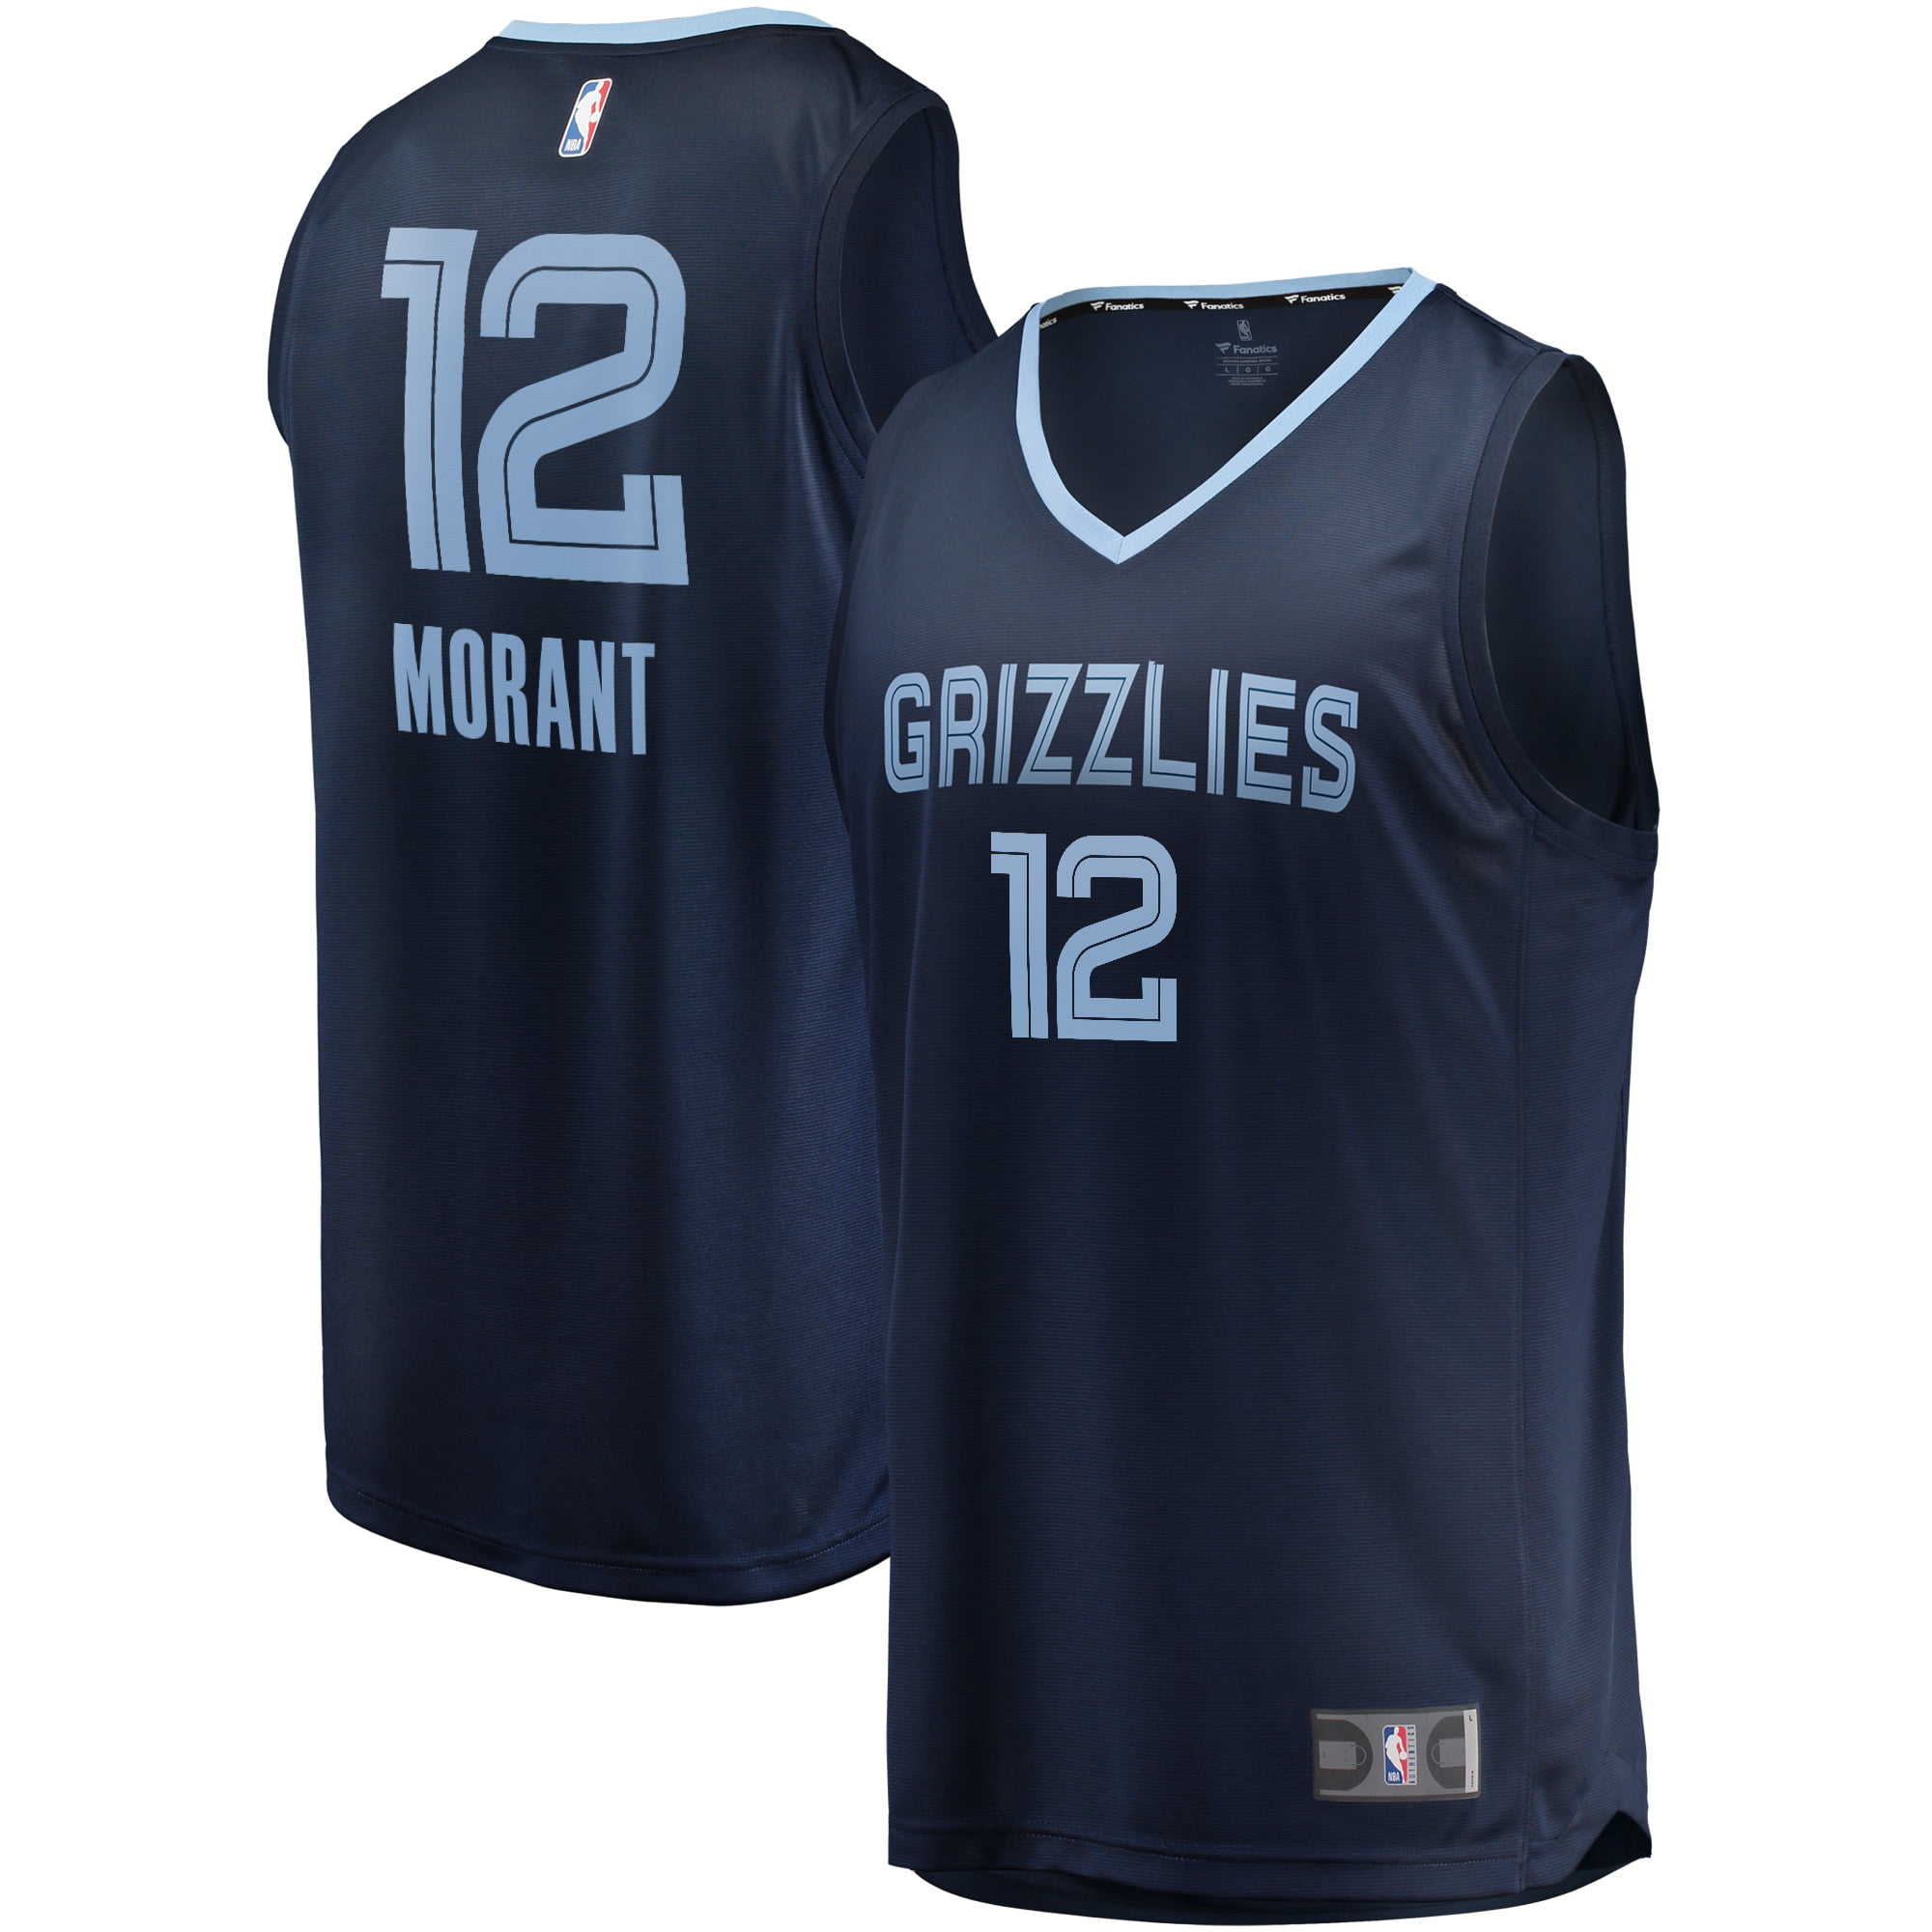 12# Morant Jersey for Men,Mens Summer Breathable Sleeveless T-Shirt Tops M